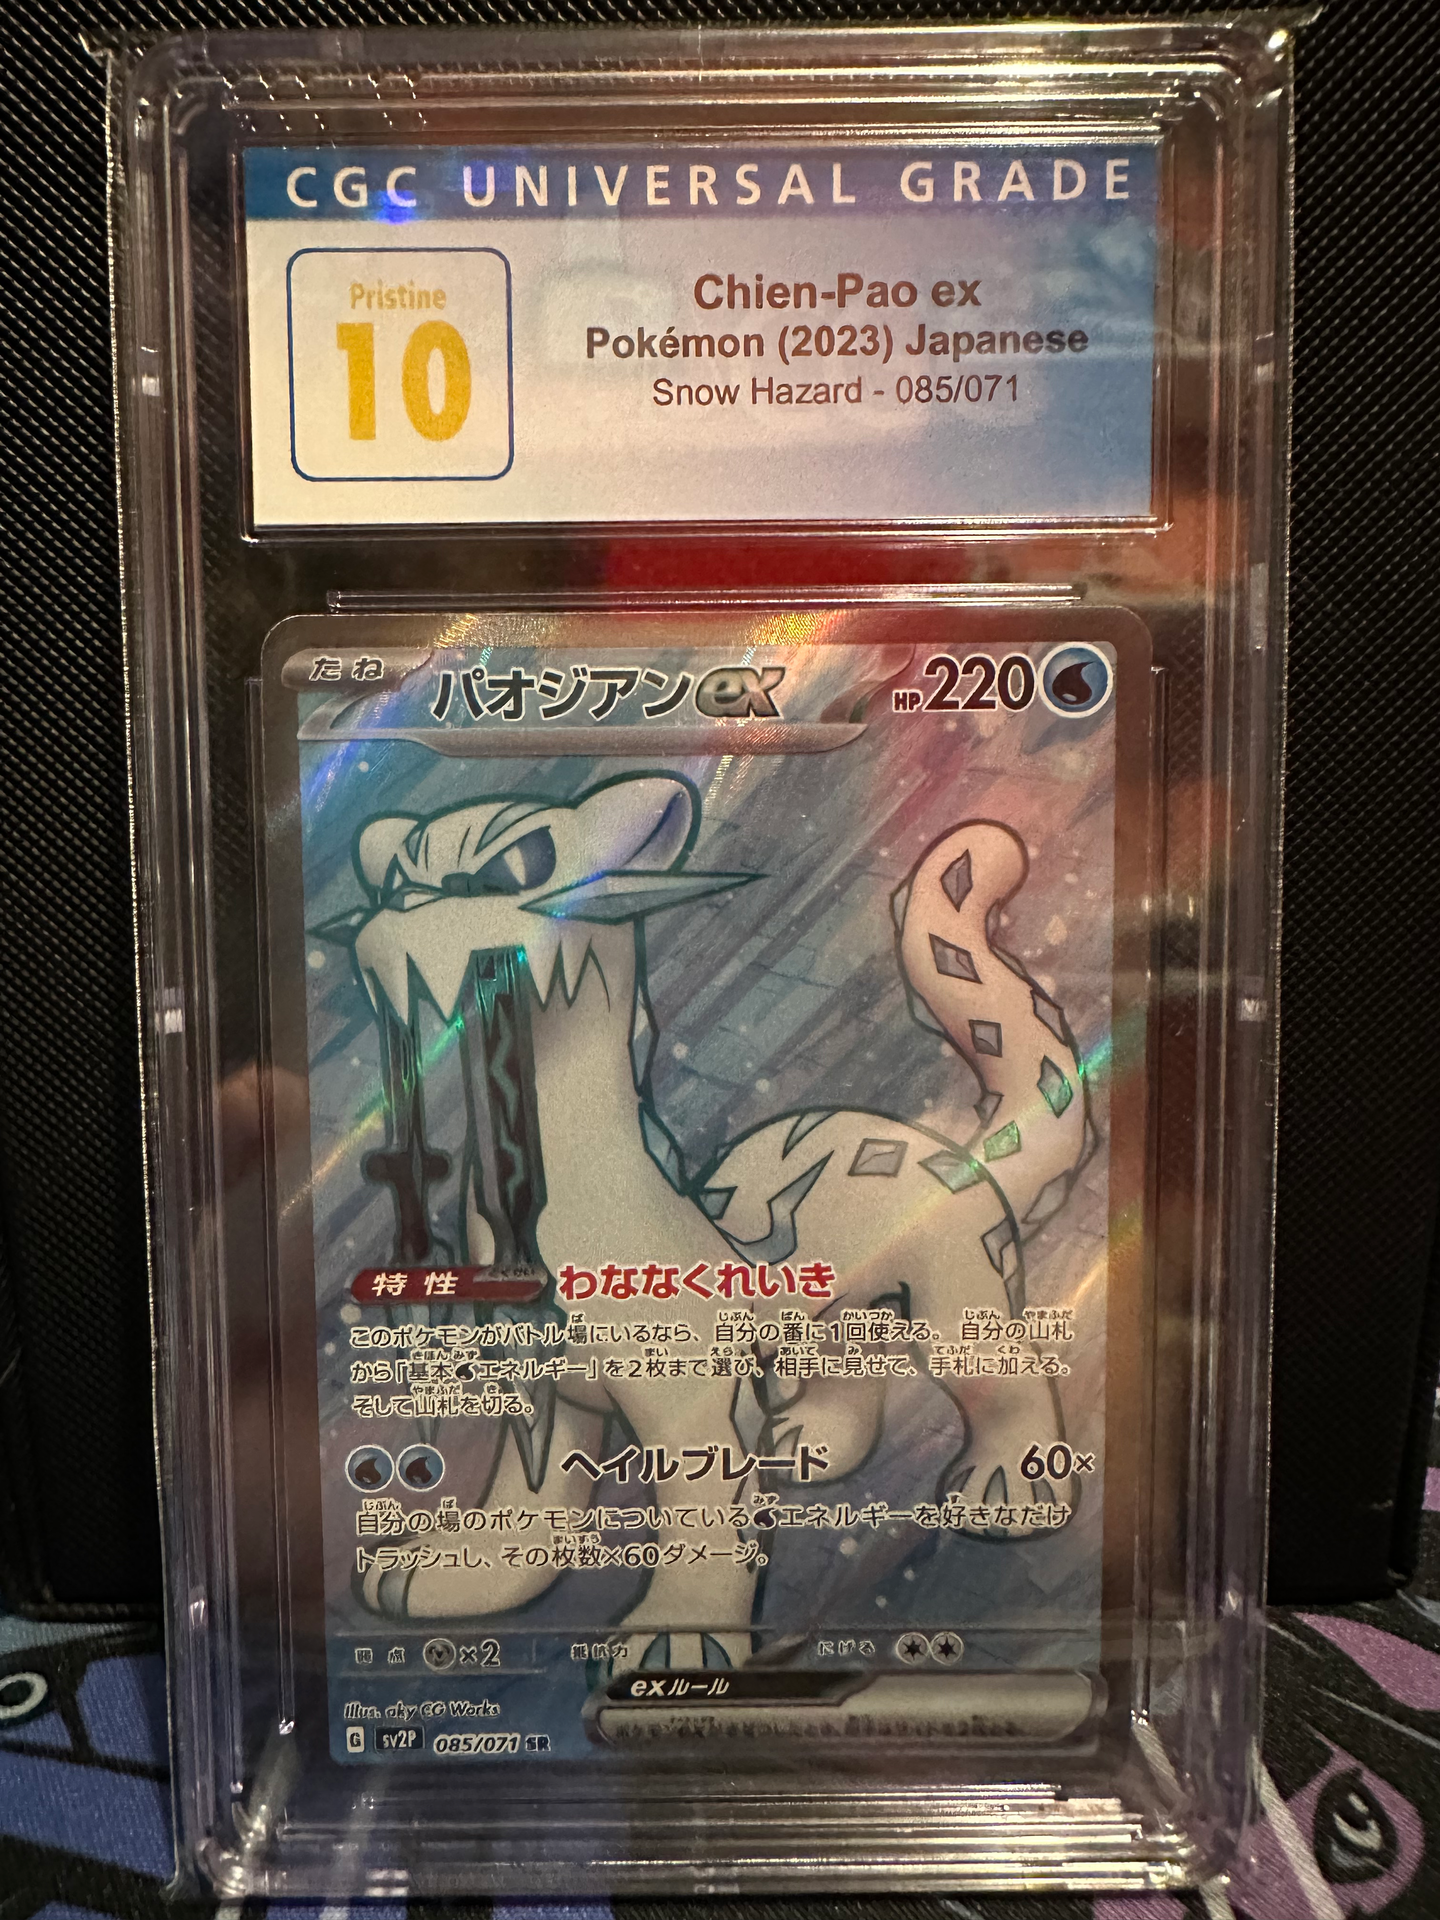 CGC 10 Japanese Chien-Pao ex Full Art (Graded Card)